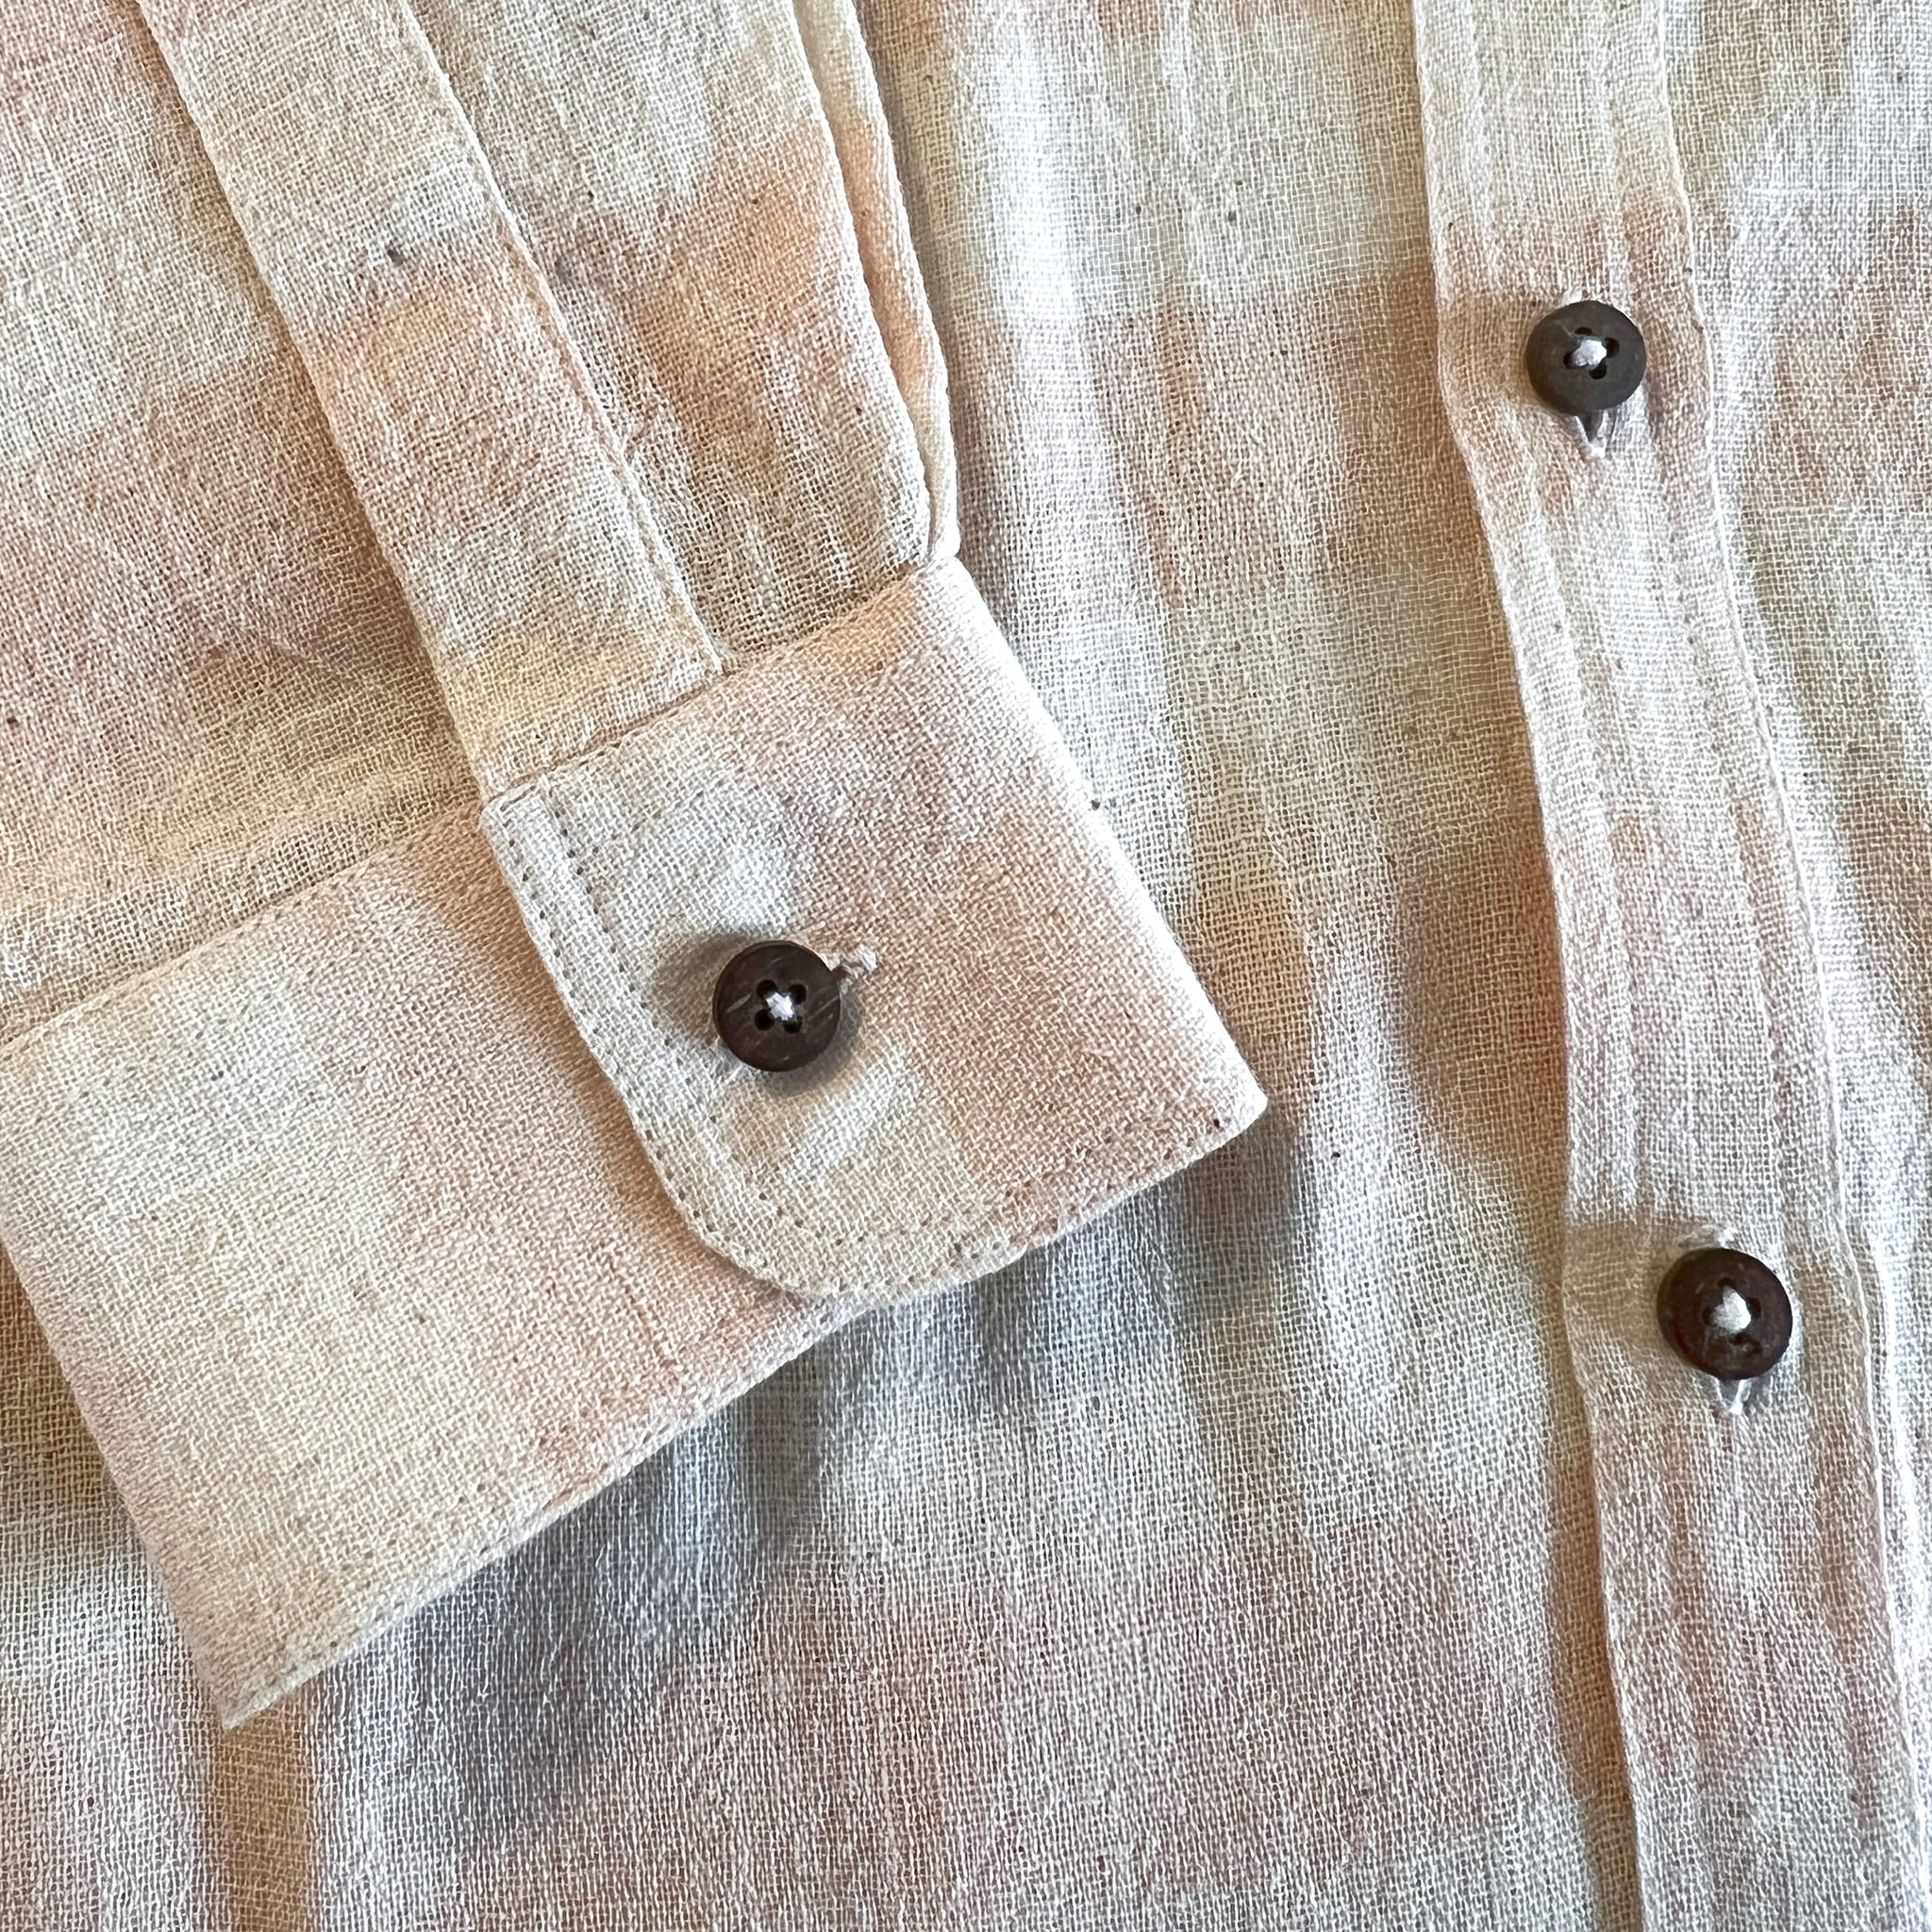 Band Shirt / Camellia Handloom Organic Kala Cotton